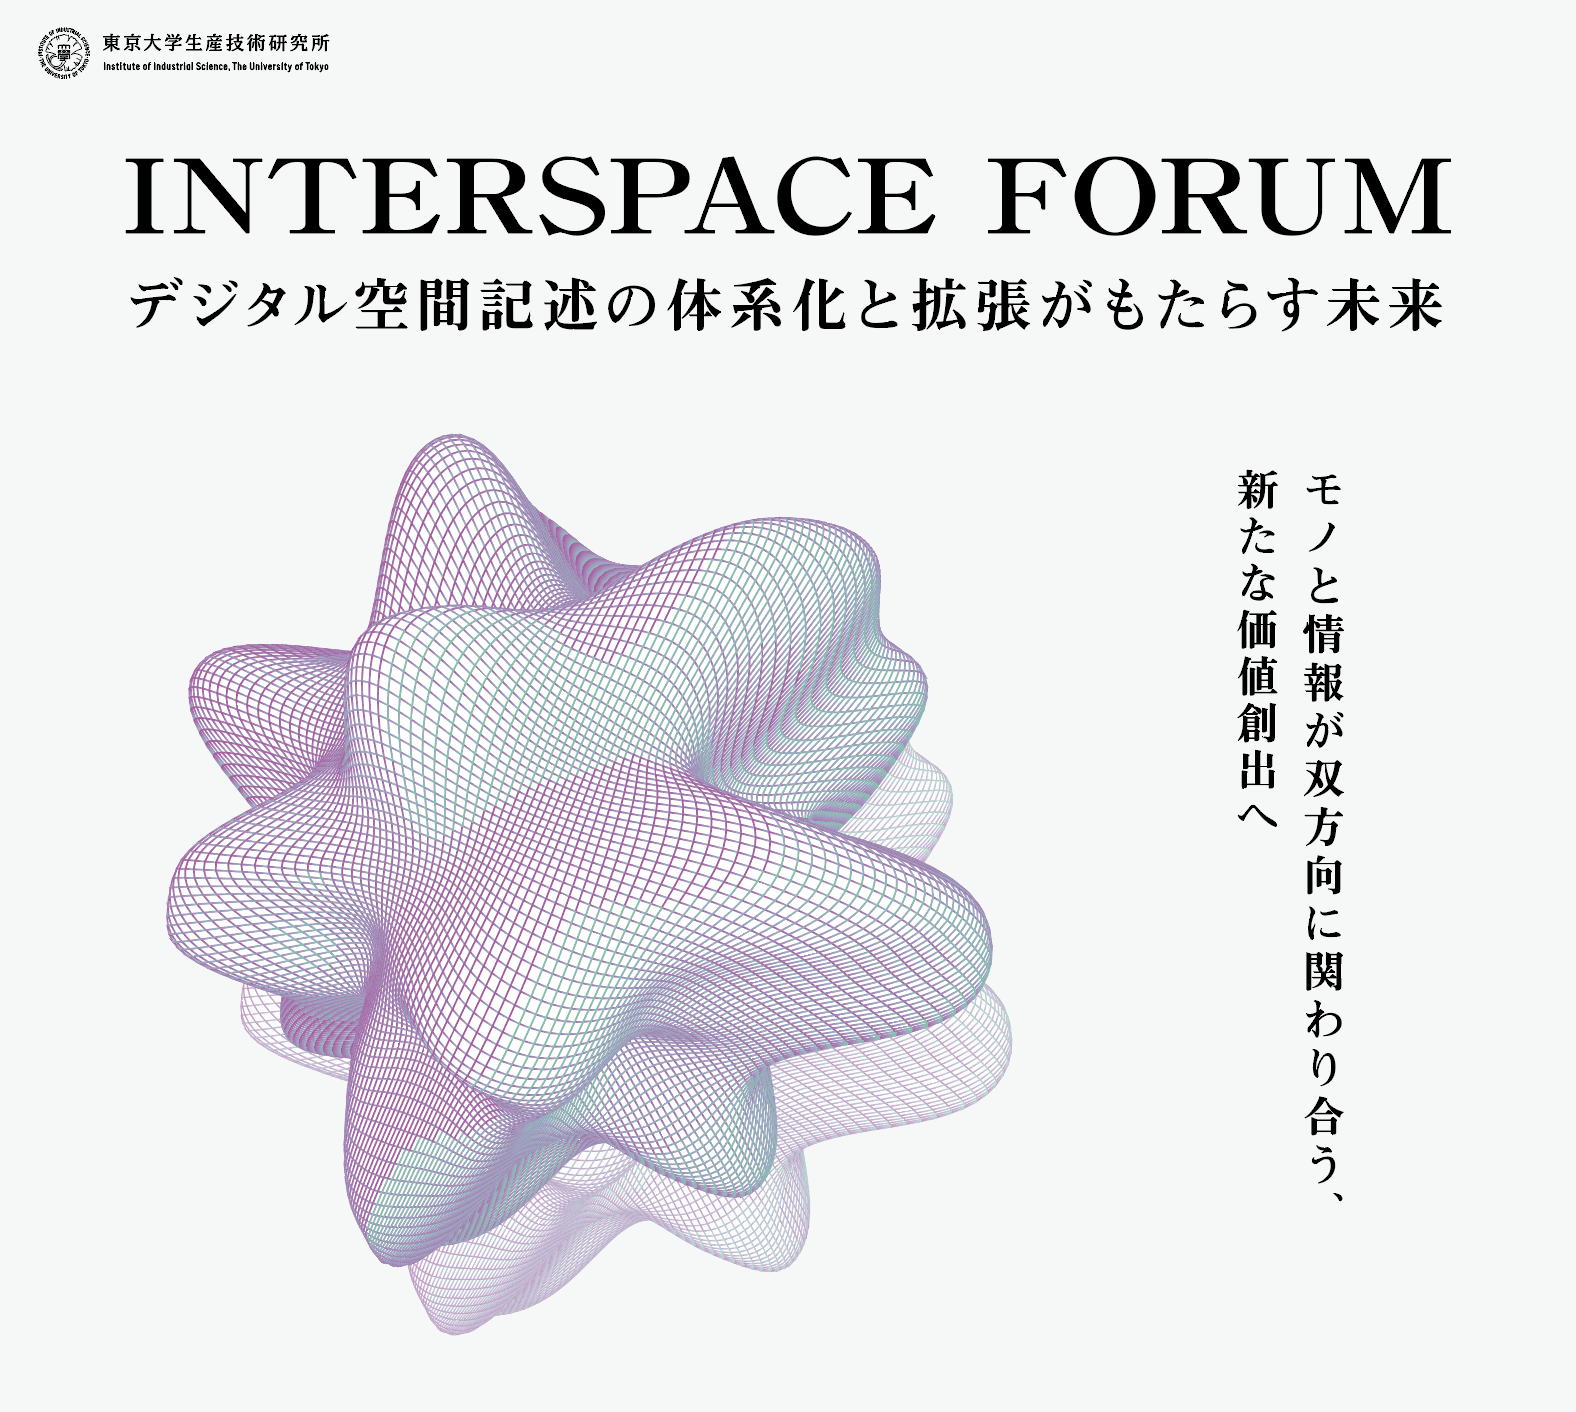 INTERSPACE FORUM_広報用画像.png